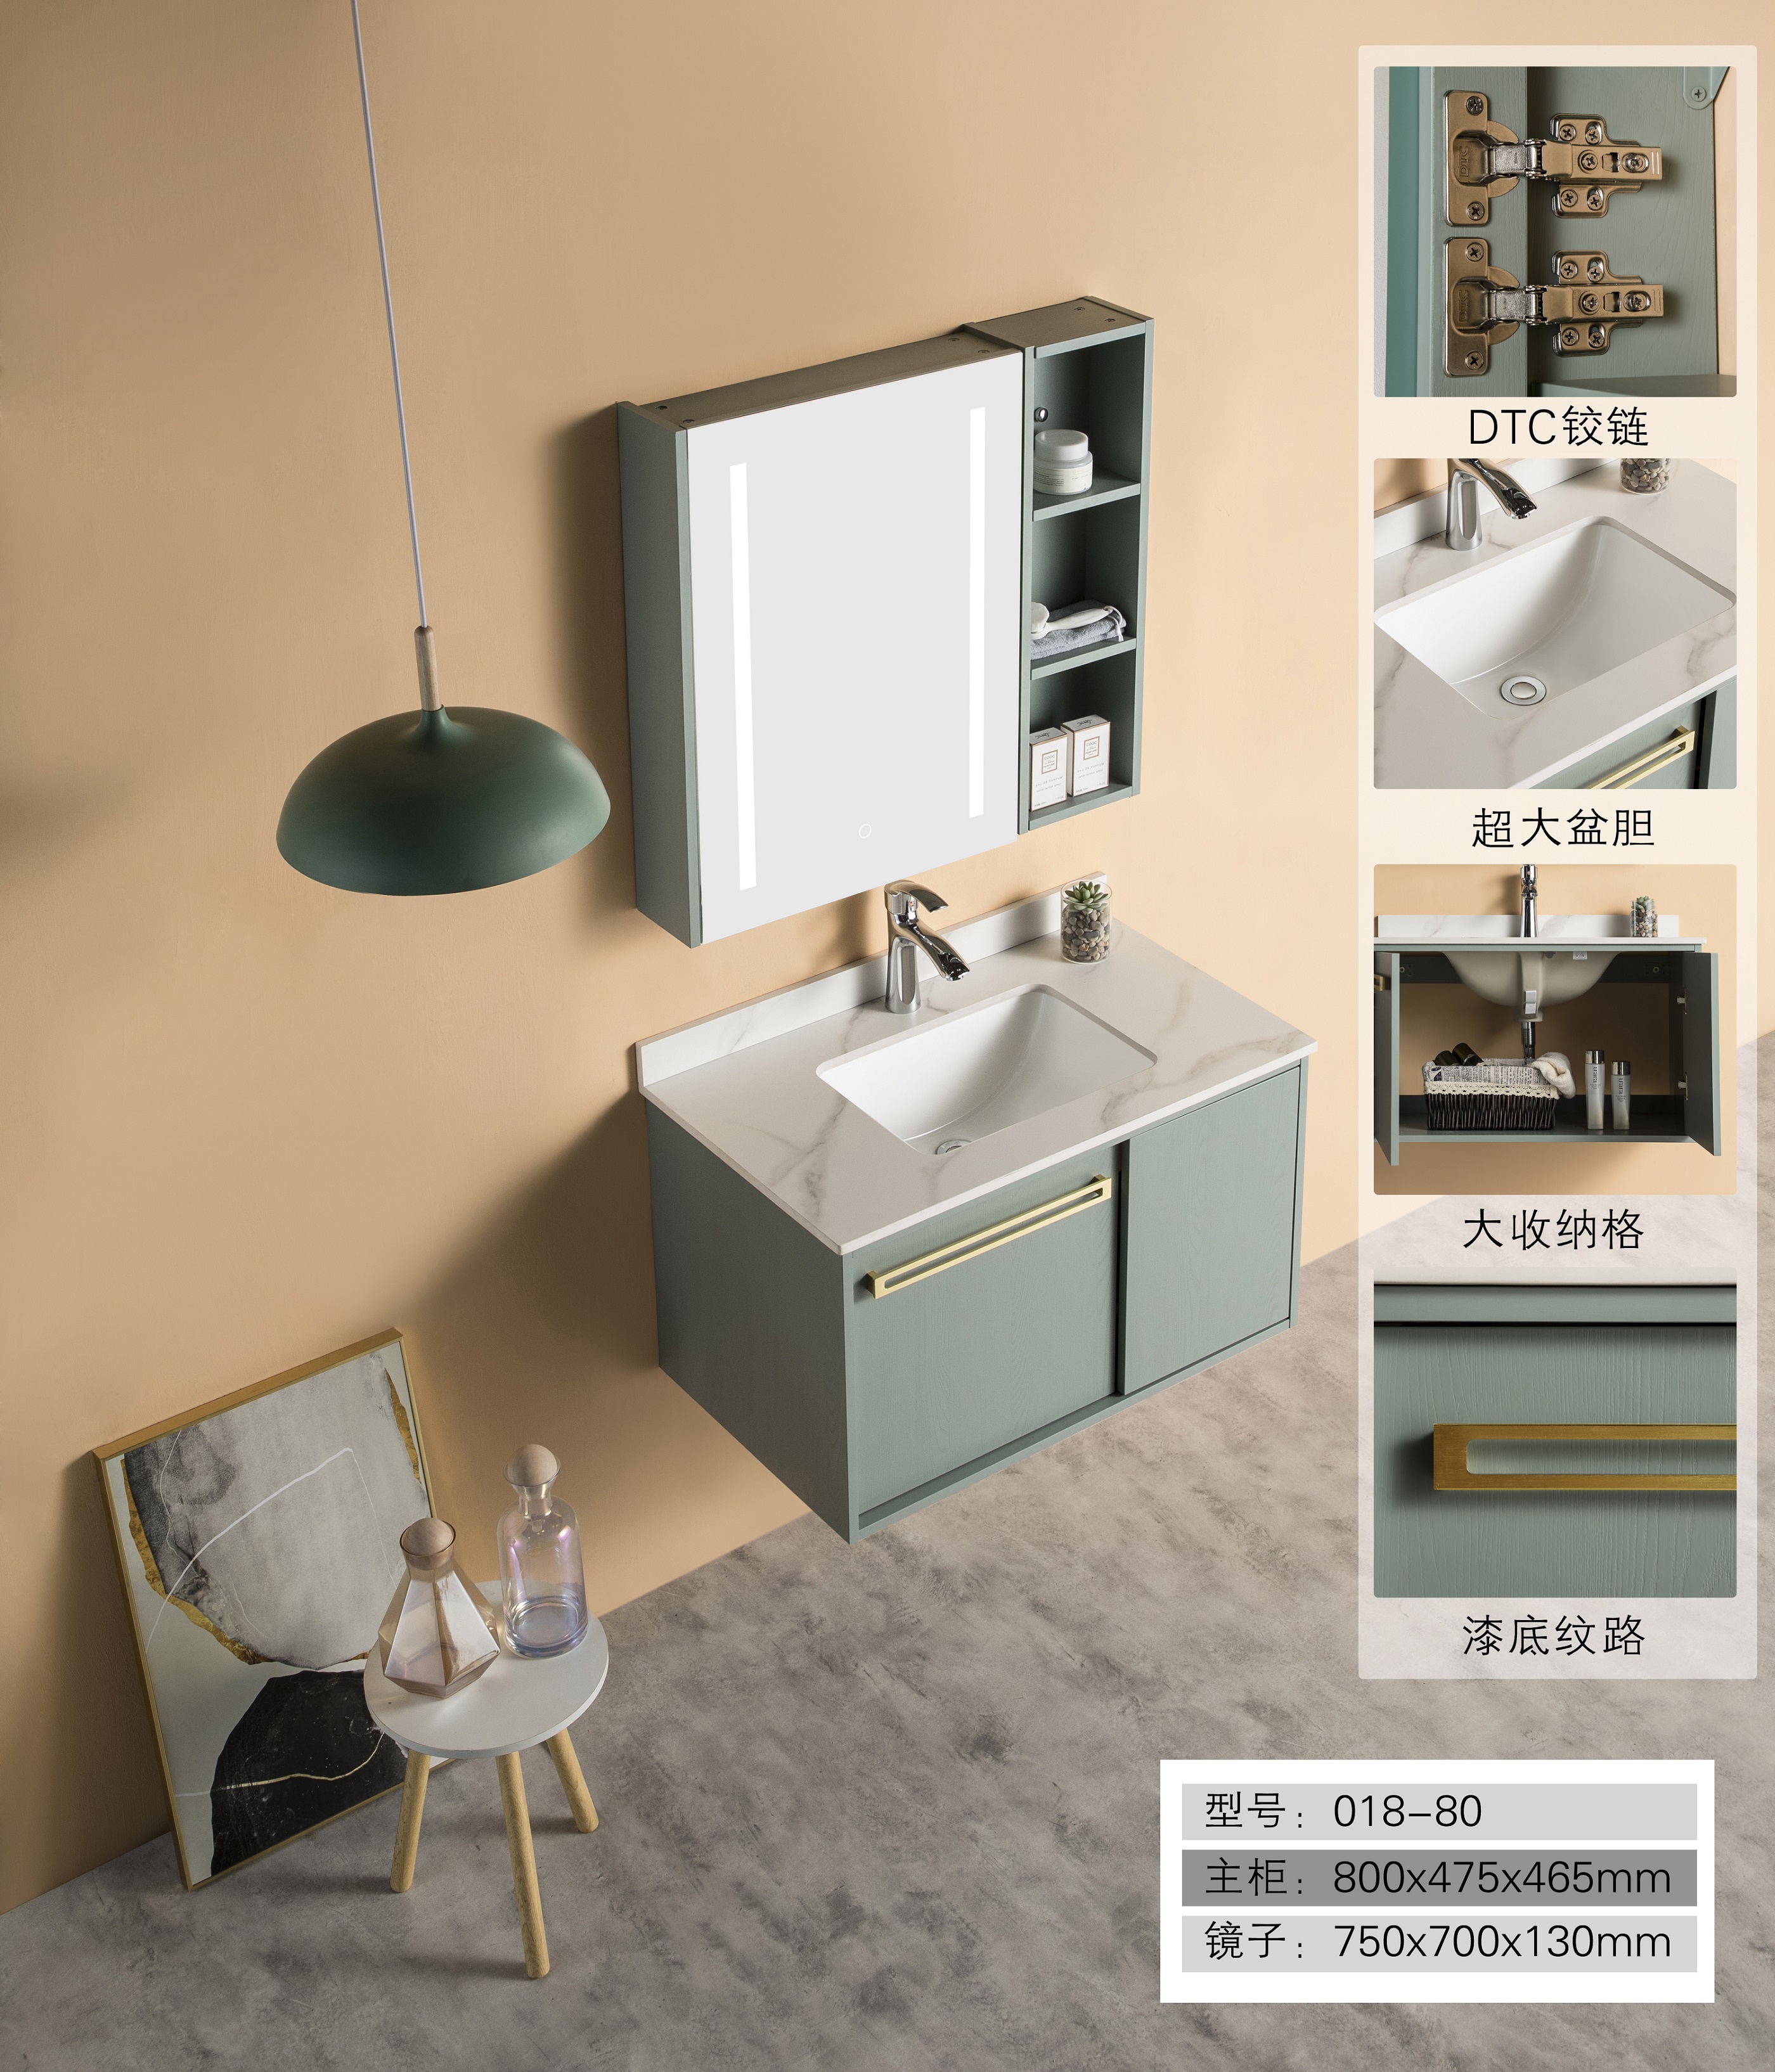 Luxury Pvc Wall Mounted Basin Cabinet Bathroom Cabinet Vanity Handles Clear